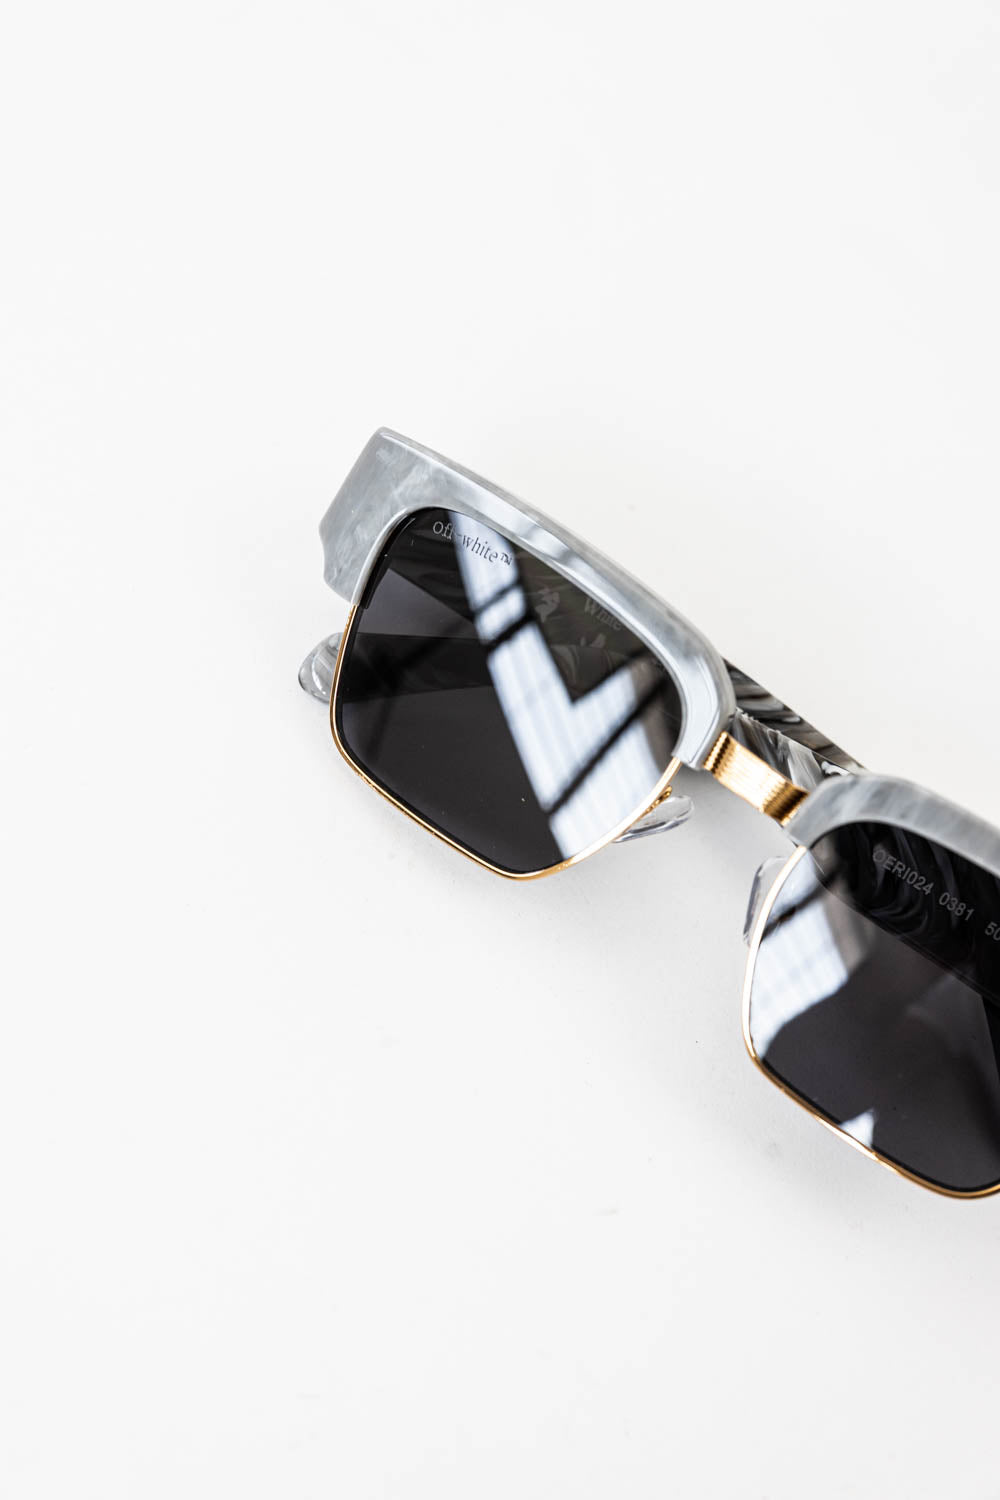 OFF-WHITE Washintong Sunglasses Black/Grey